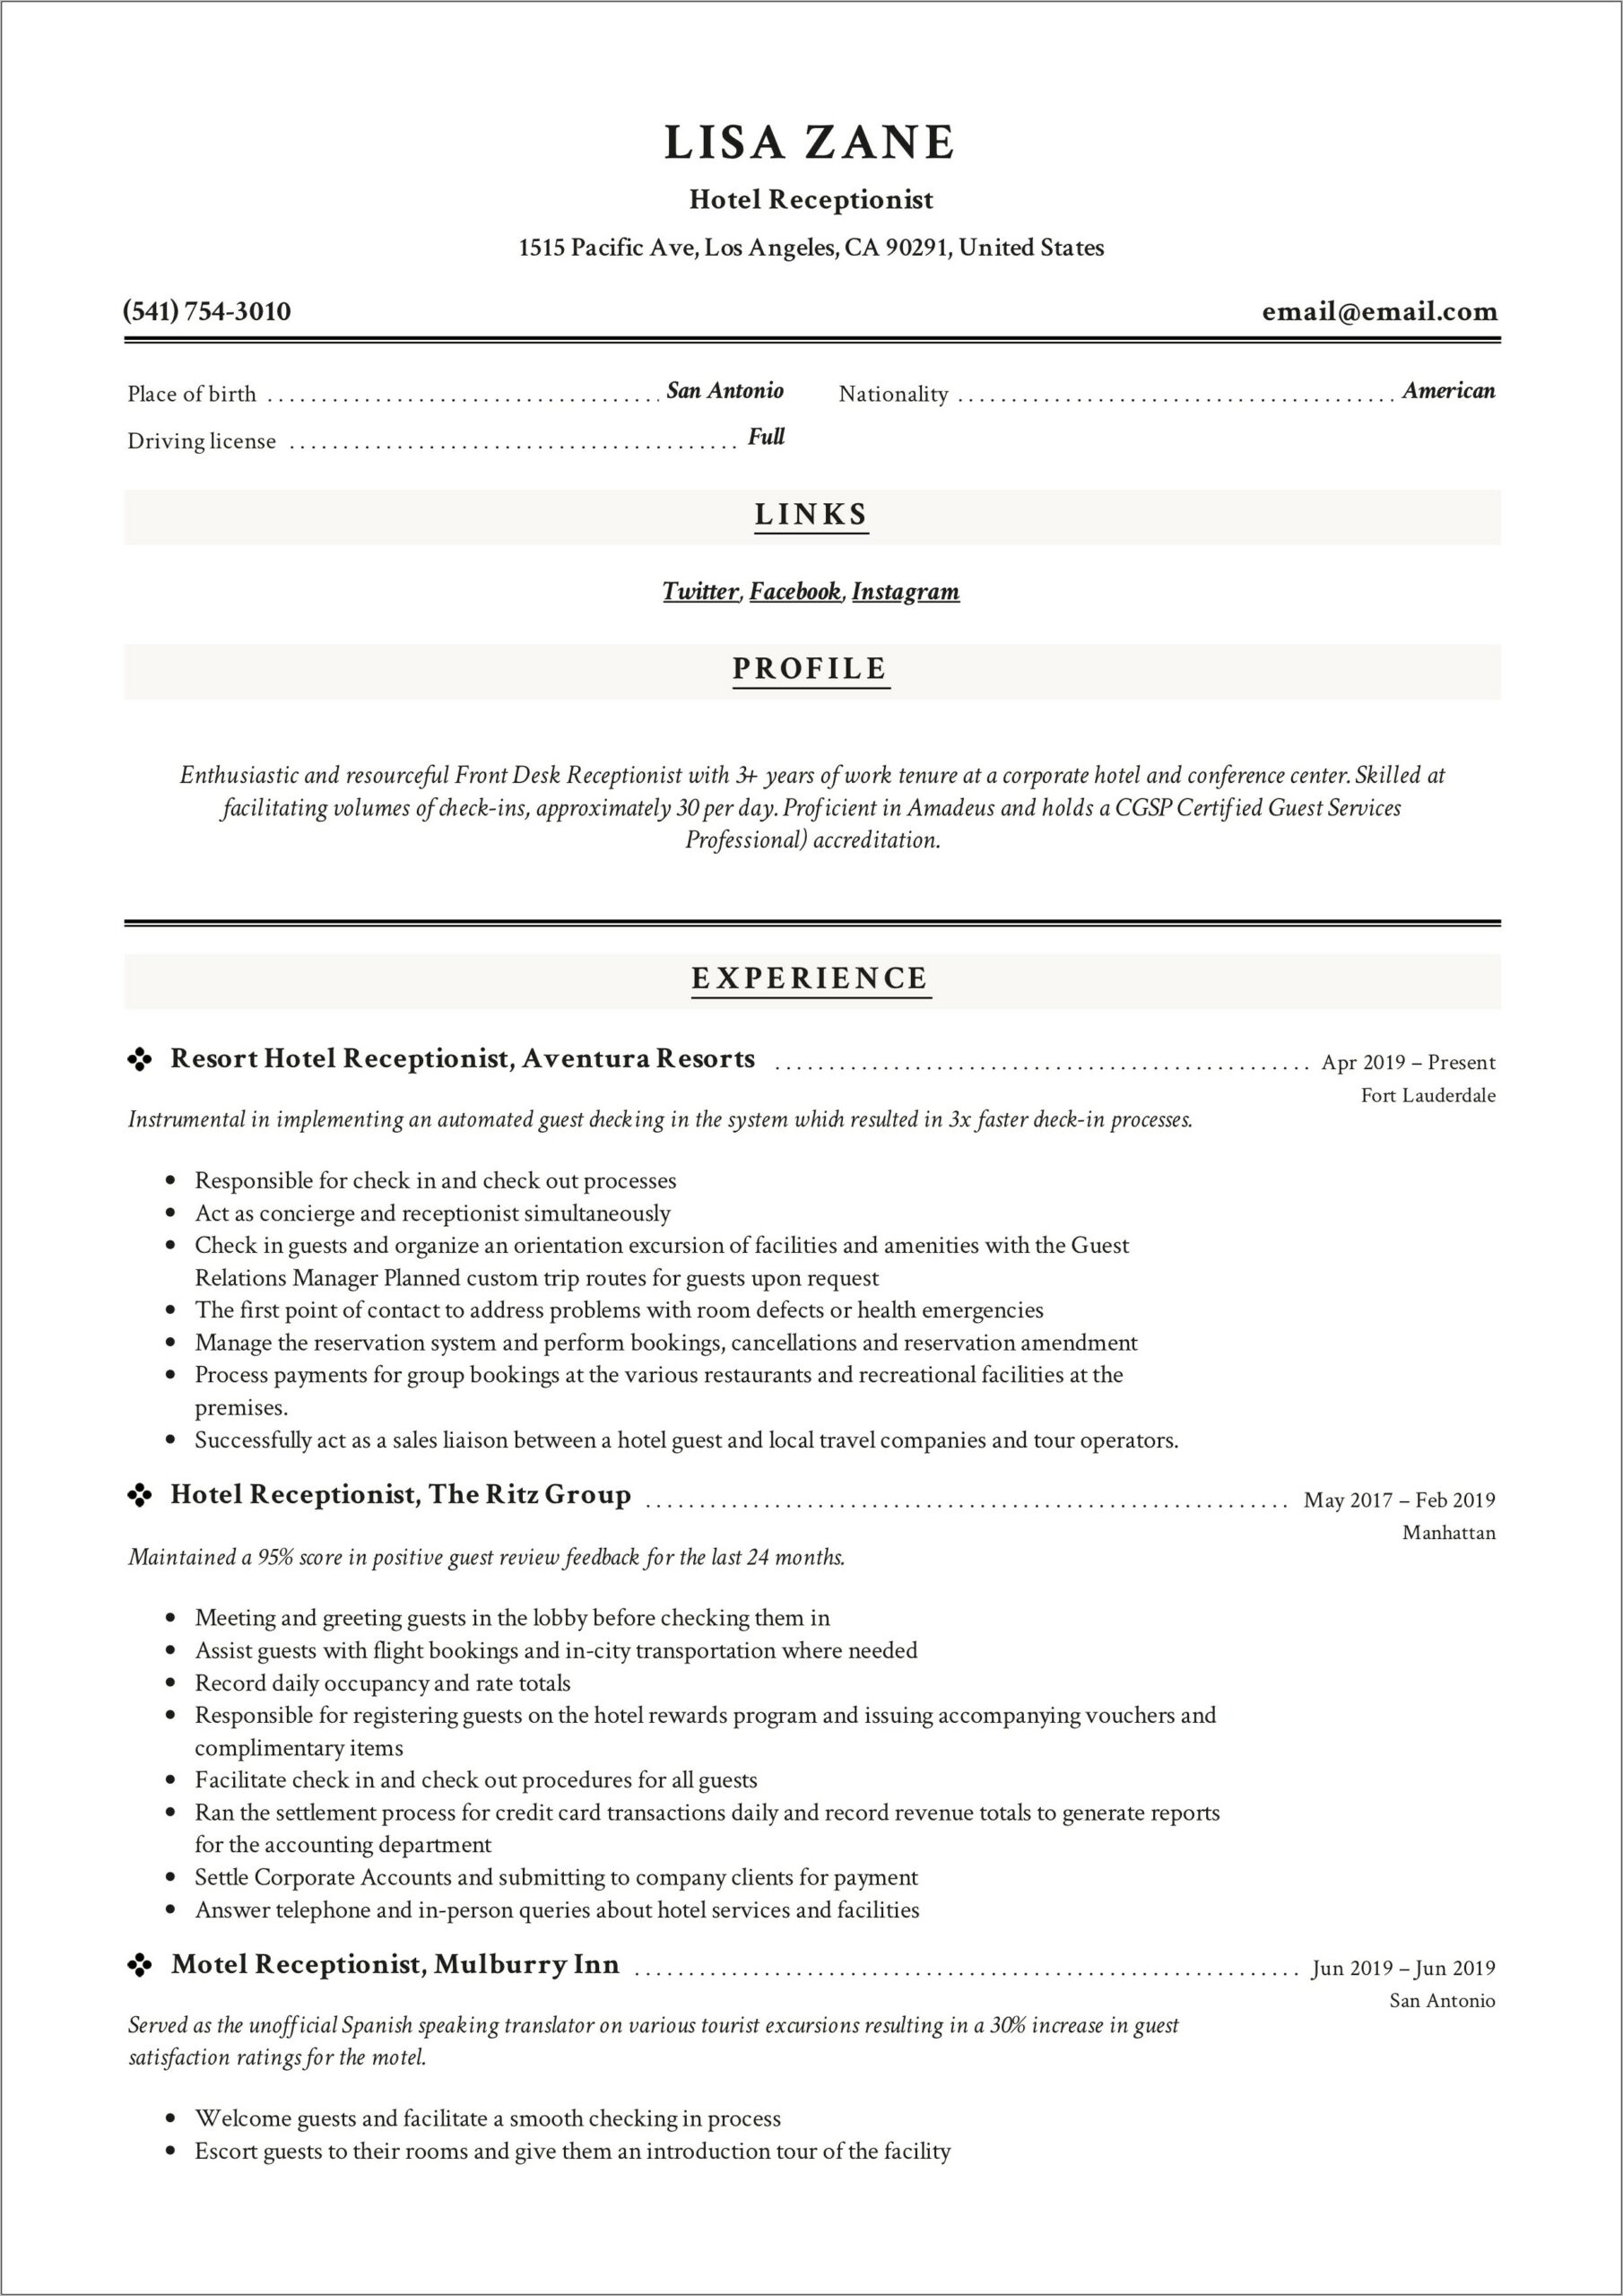 Job Description For Resume Front Desk